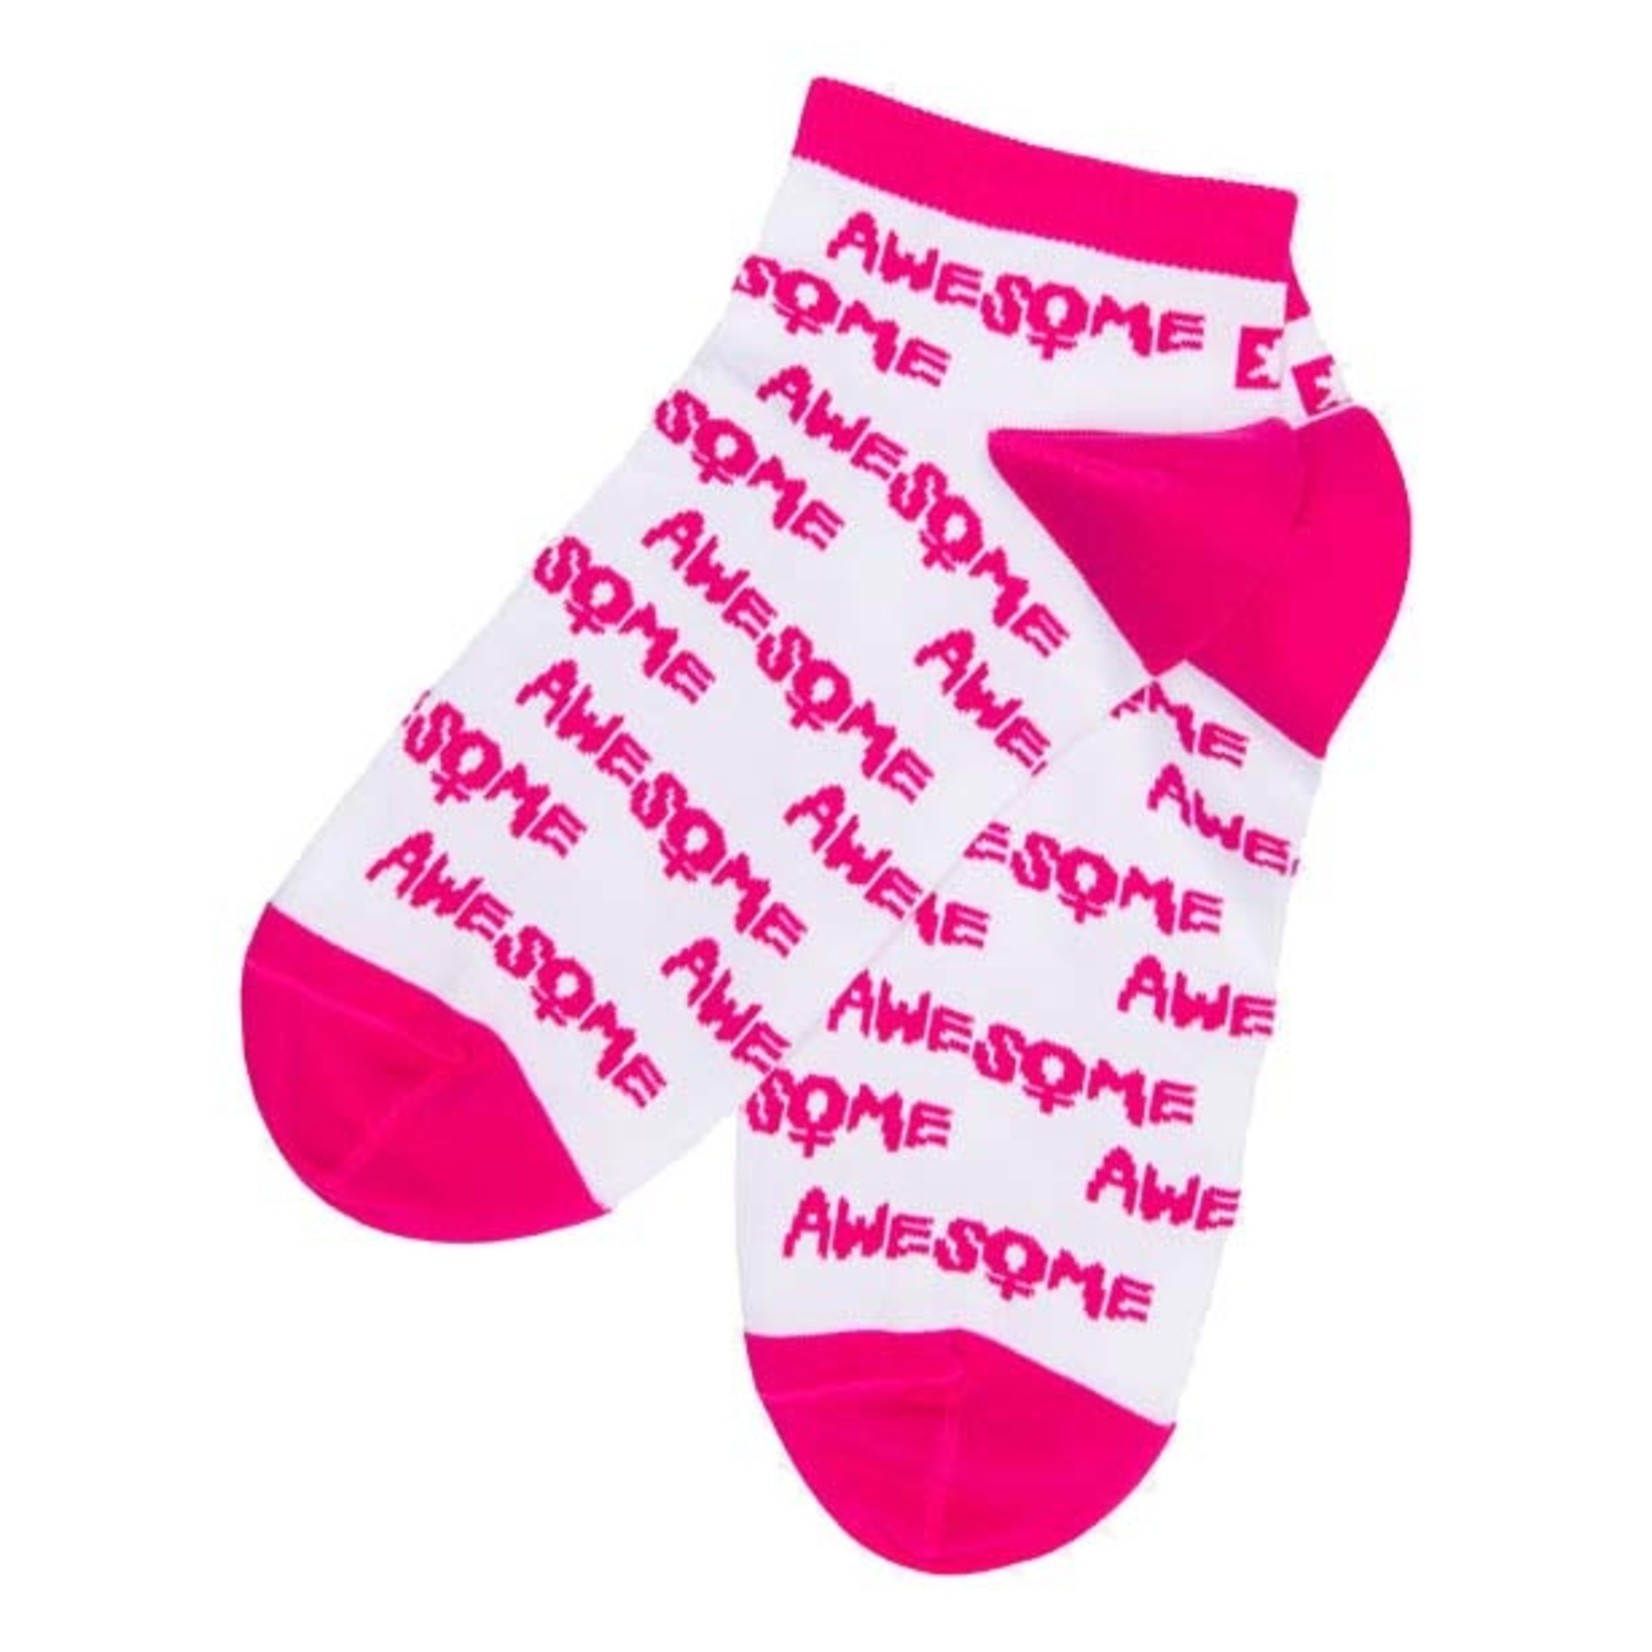 Kootenay Awesome Ankle Socks, Women